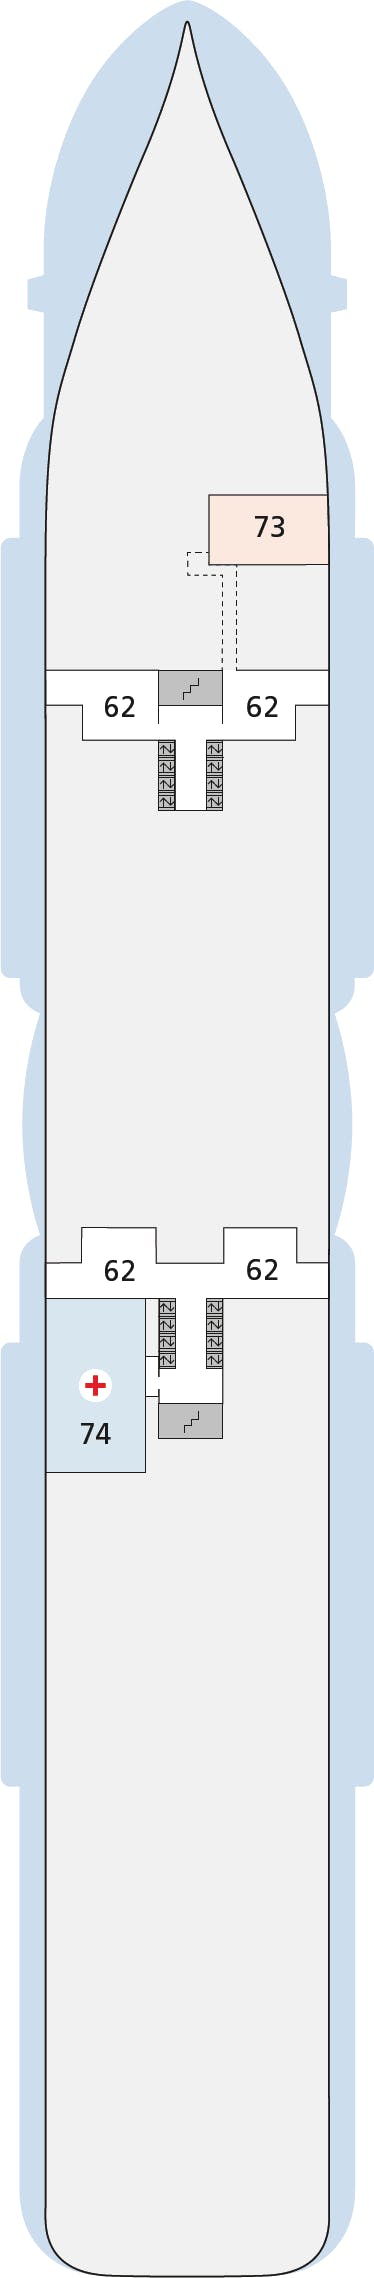 AIDAcosma - AIDA Cruises - Deck 3 (Deck 3)